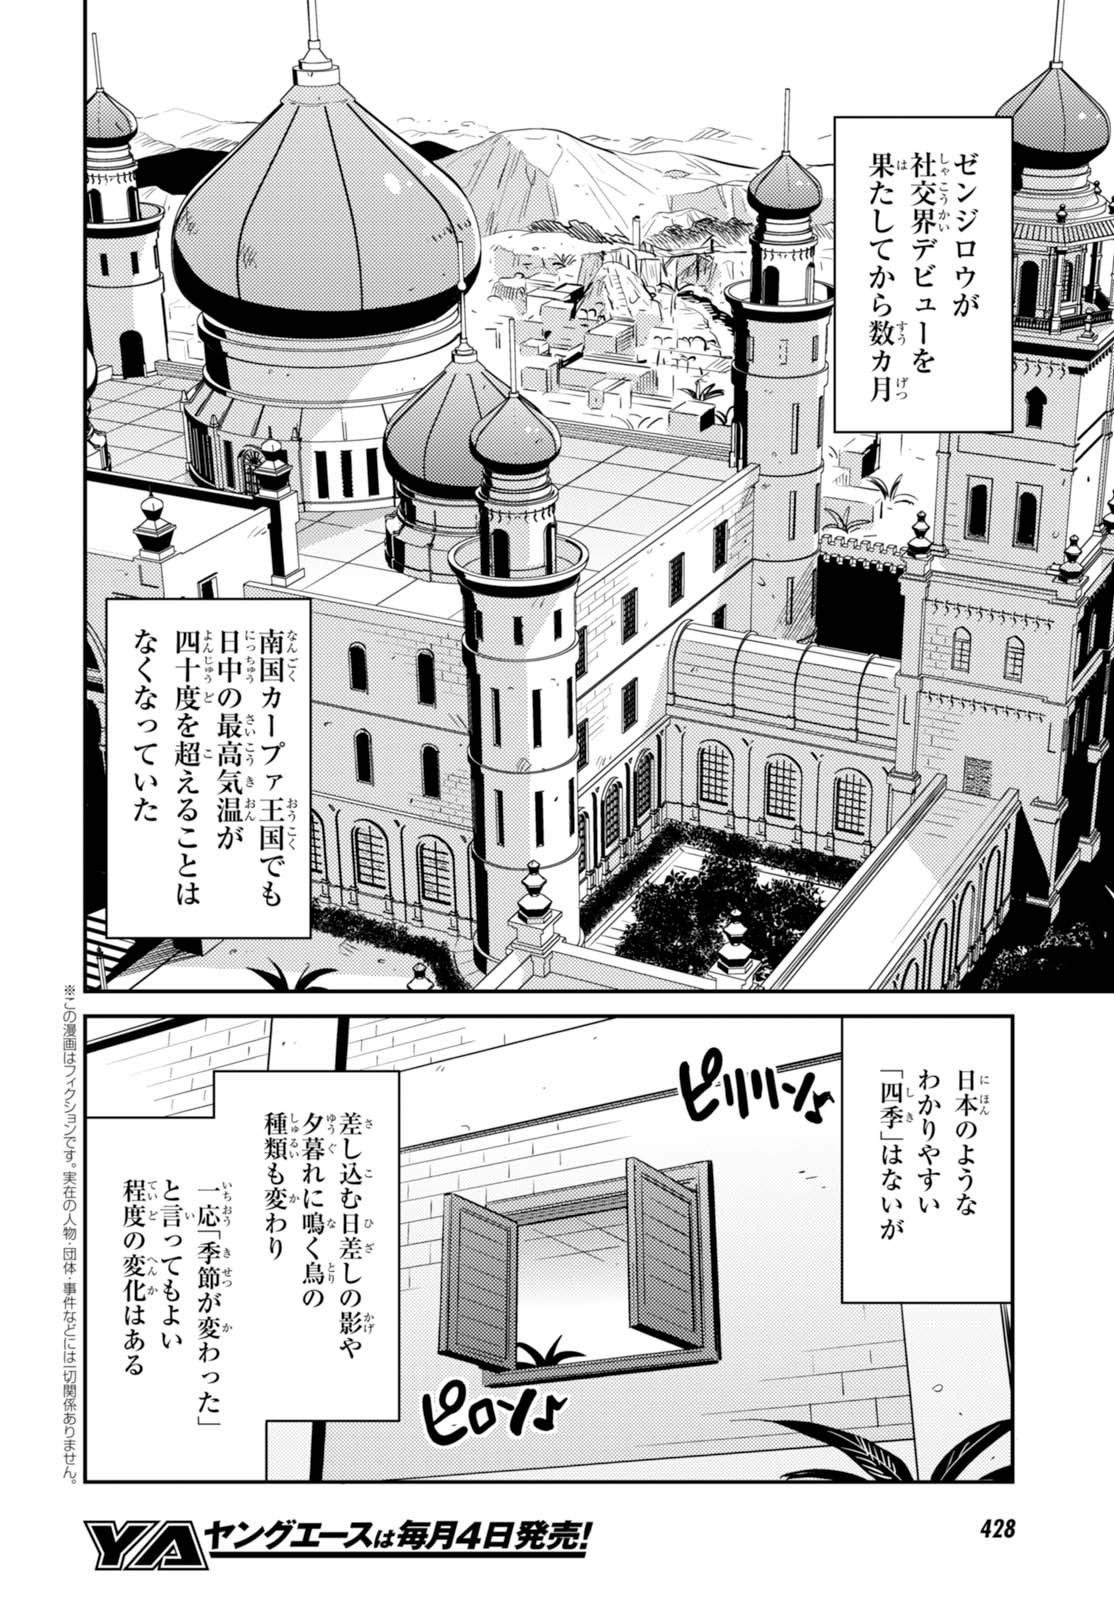 Risou no Himo Seikatsu - Chapter 009 - Page 2